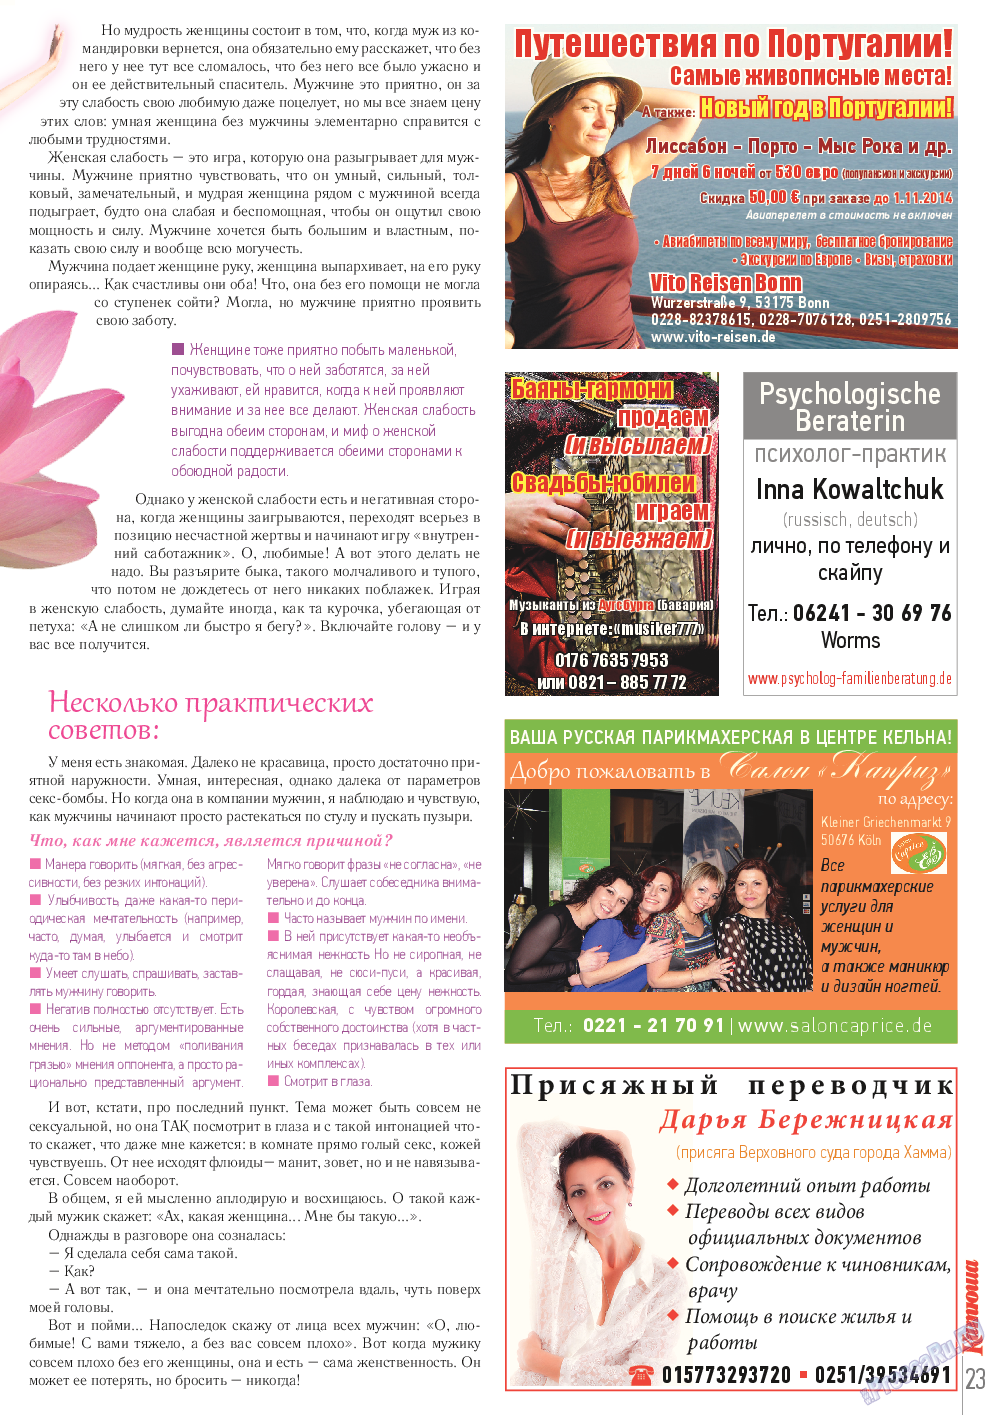 Катюша, журнал. 2014 №41 стр.23